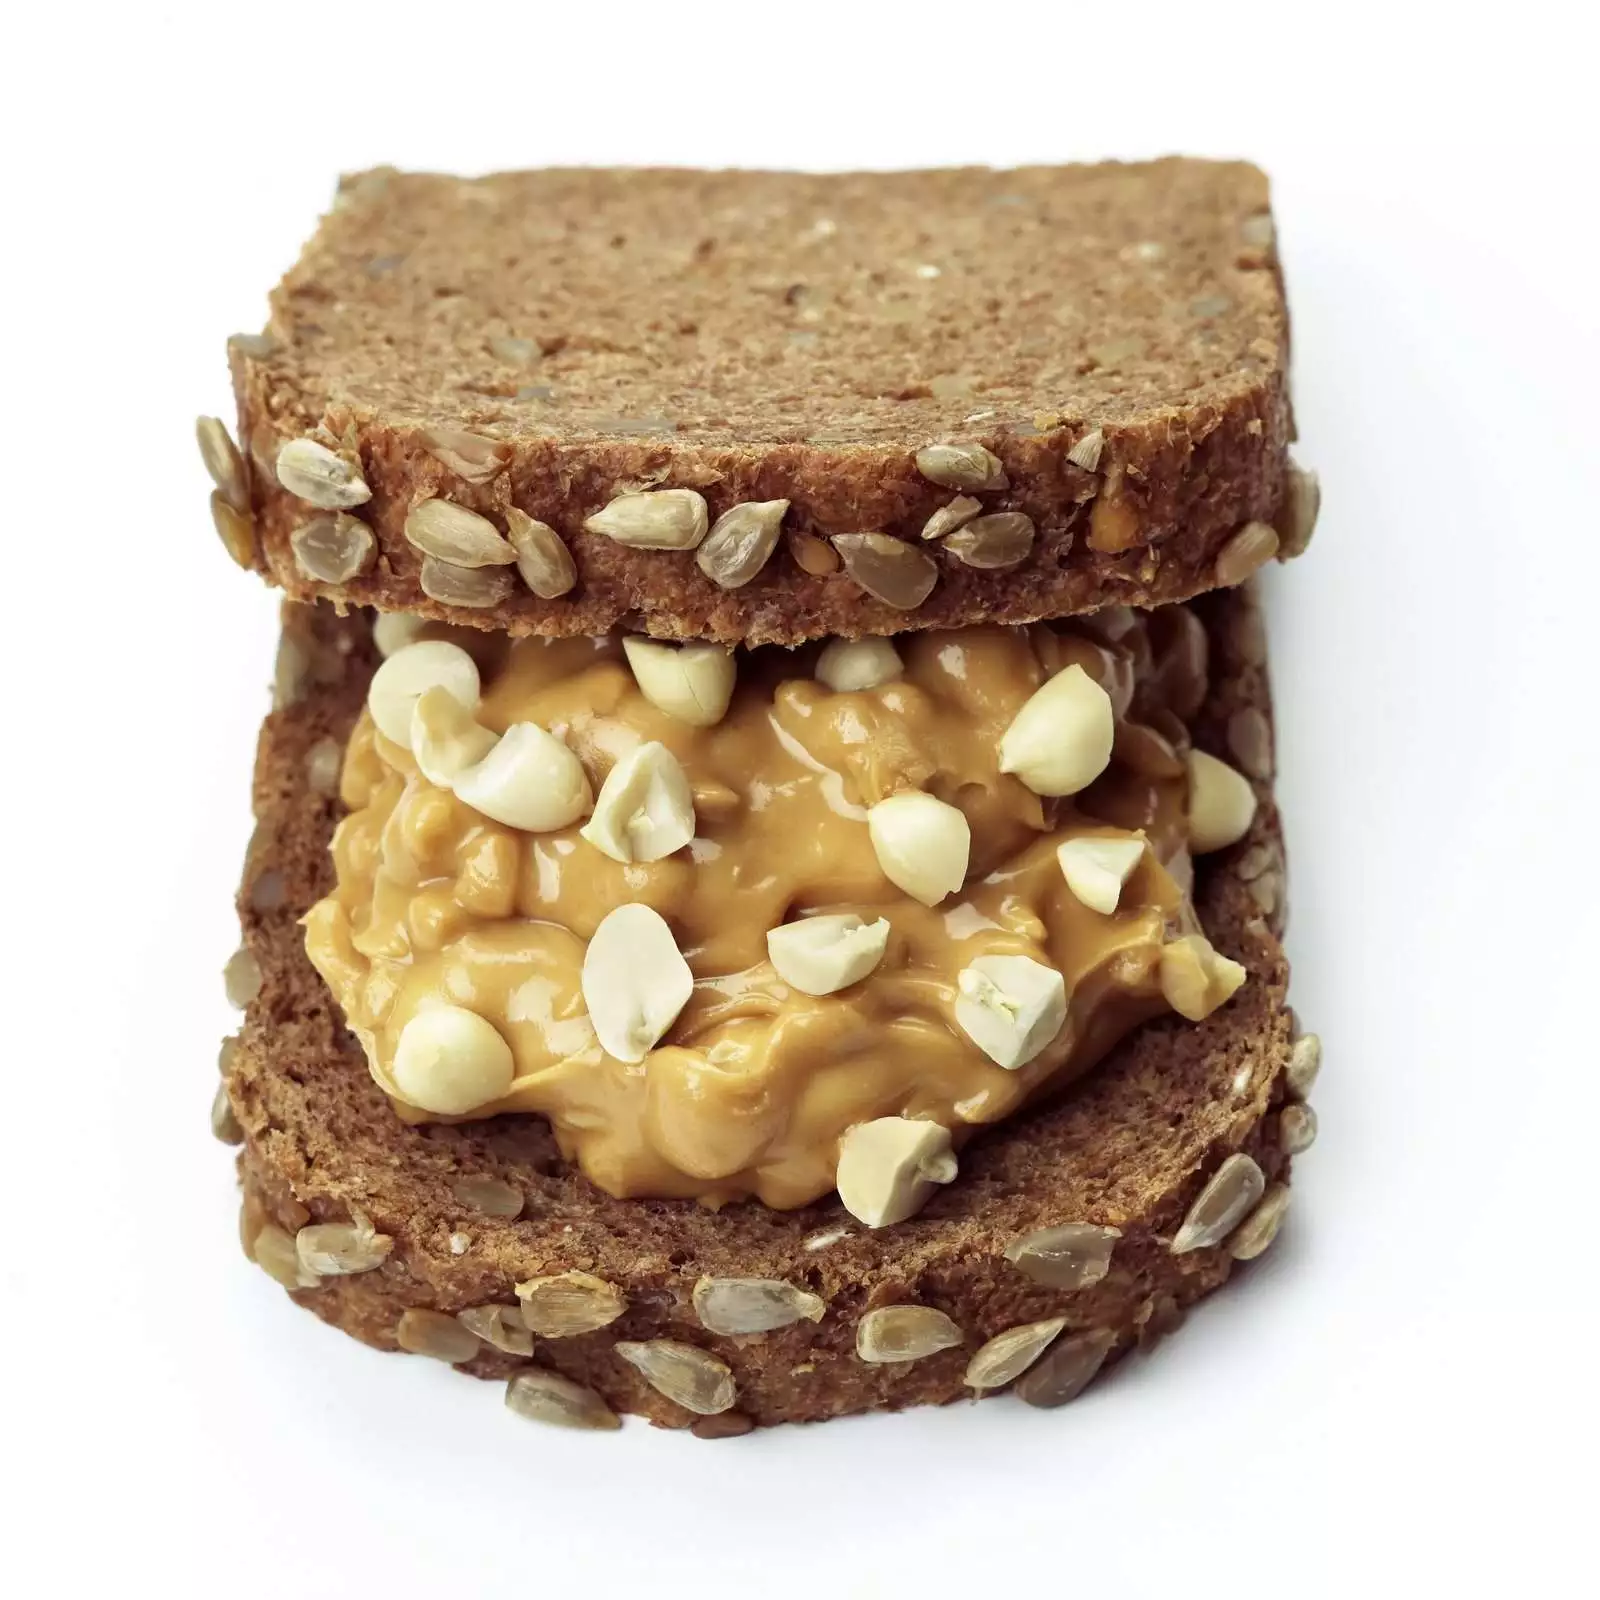 Is peanut butter Healthy?